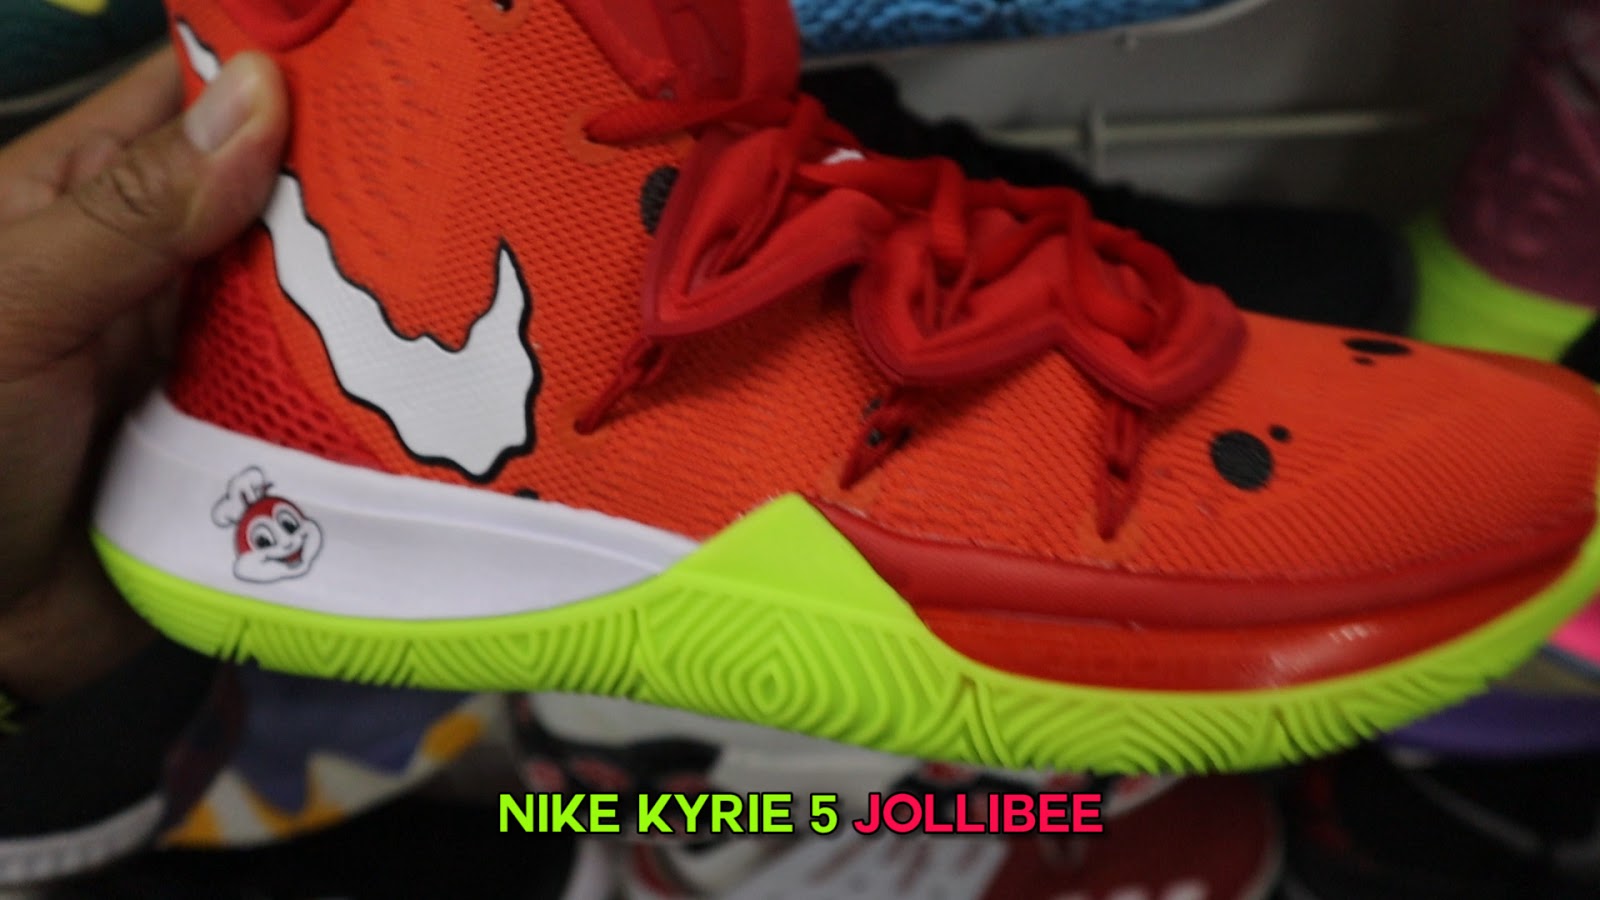 Nike Kyrie 5 Ropa y Accesorios Mercado Libre Ecuador